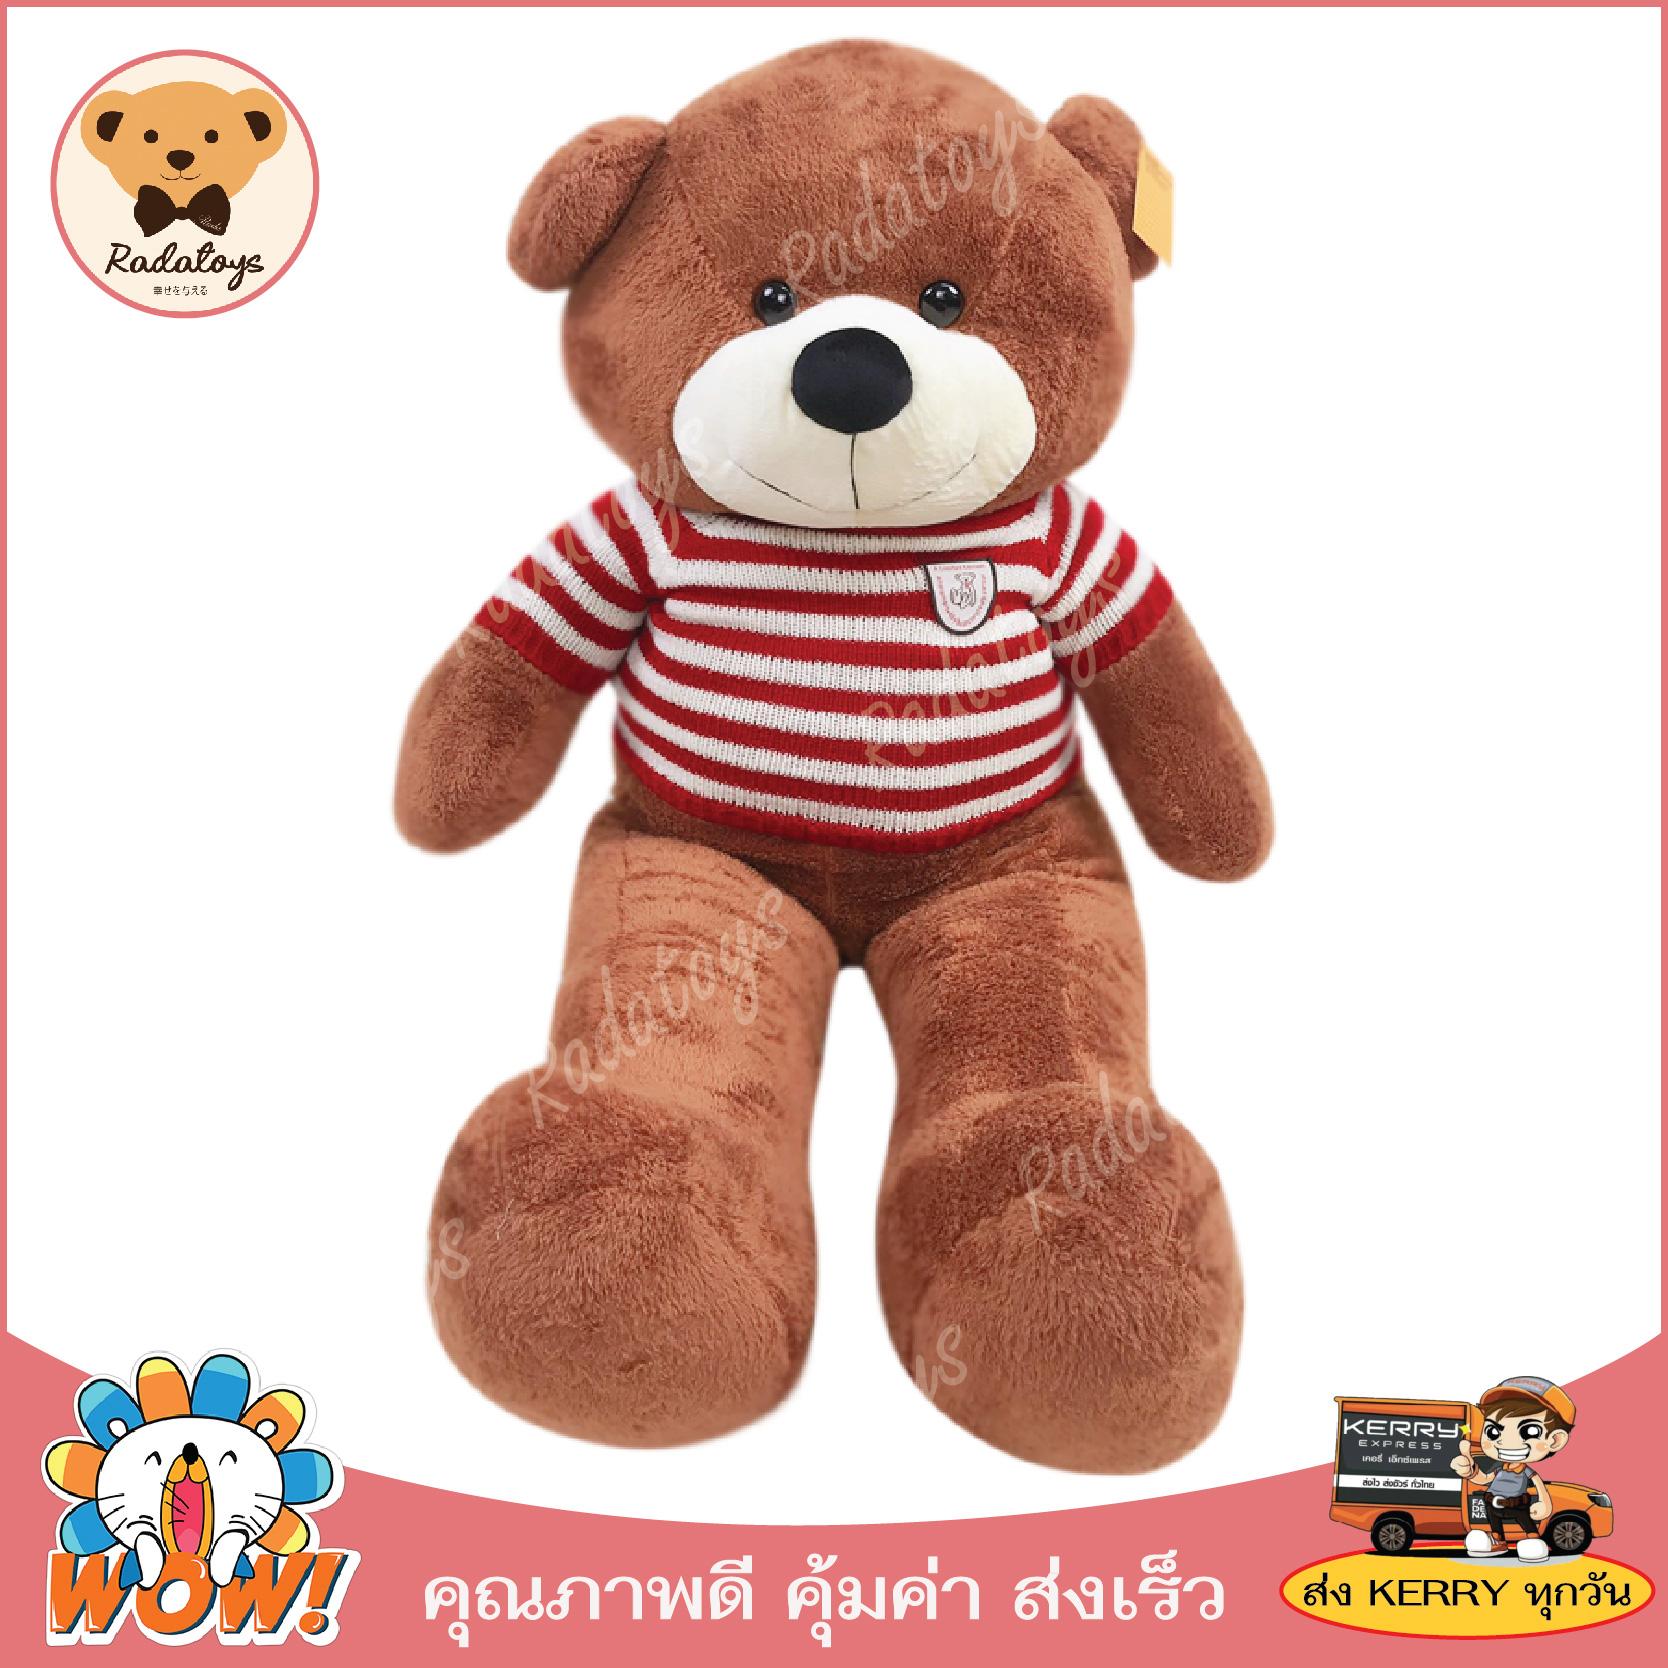 RadaToys ?ตุ๊กตาหมีตัวใหญ่ ตุ๊กตาหมีจัมโบ้ ตุ๊กตาหมีใส่เสื้อไหมพรม ขนาด 1.2 เมตร น่ารักน่ากอด ผลิตในประเทศไทย